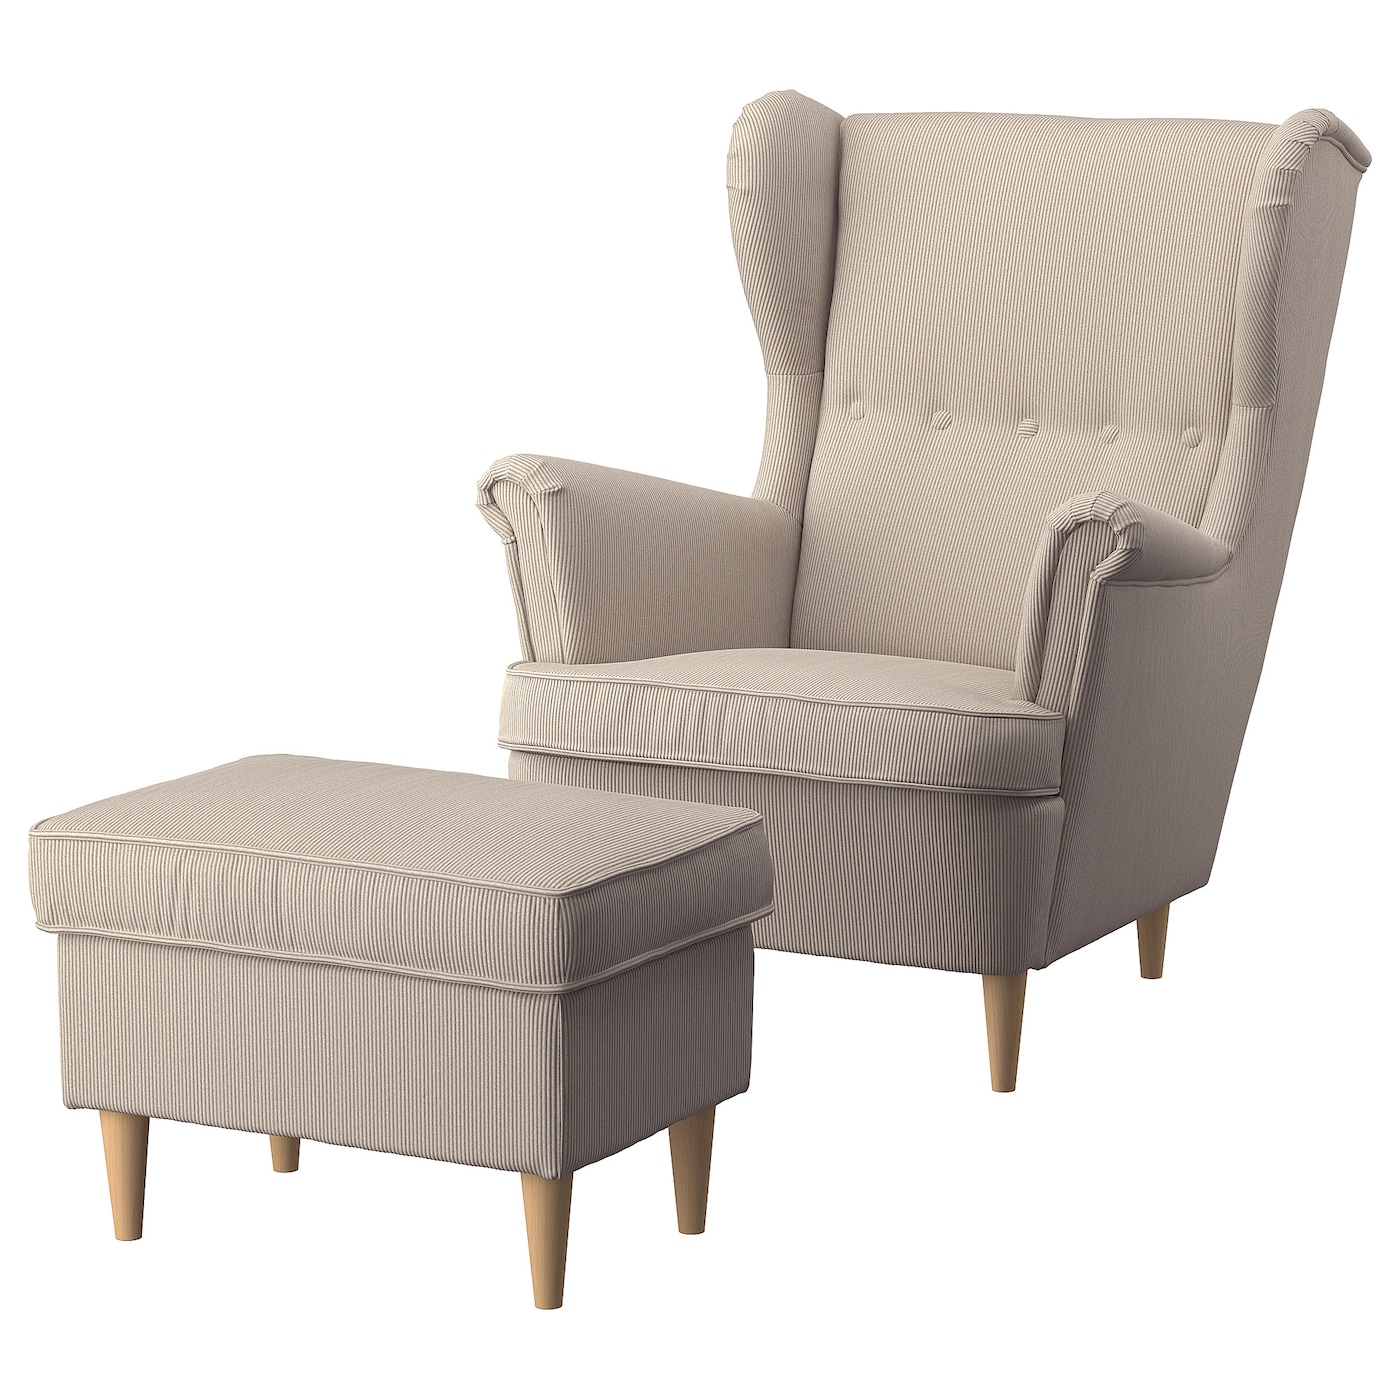 Кресло и табурет для ног - IKEA STRANDMON, 82х96х101 см, бежевый, СТРАНДМОН ИКЕА